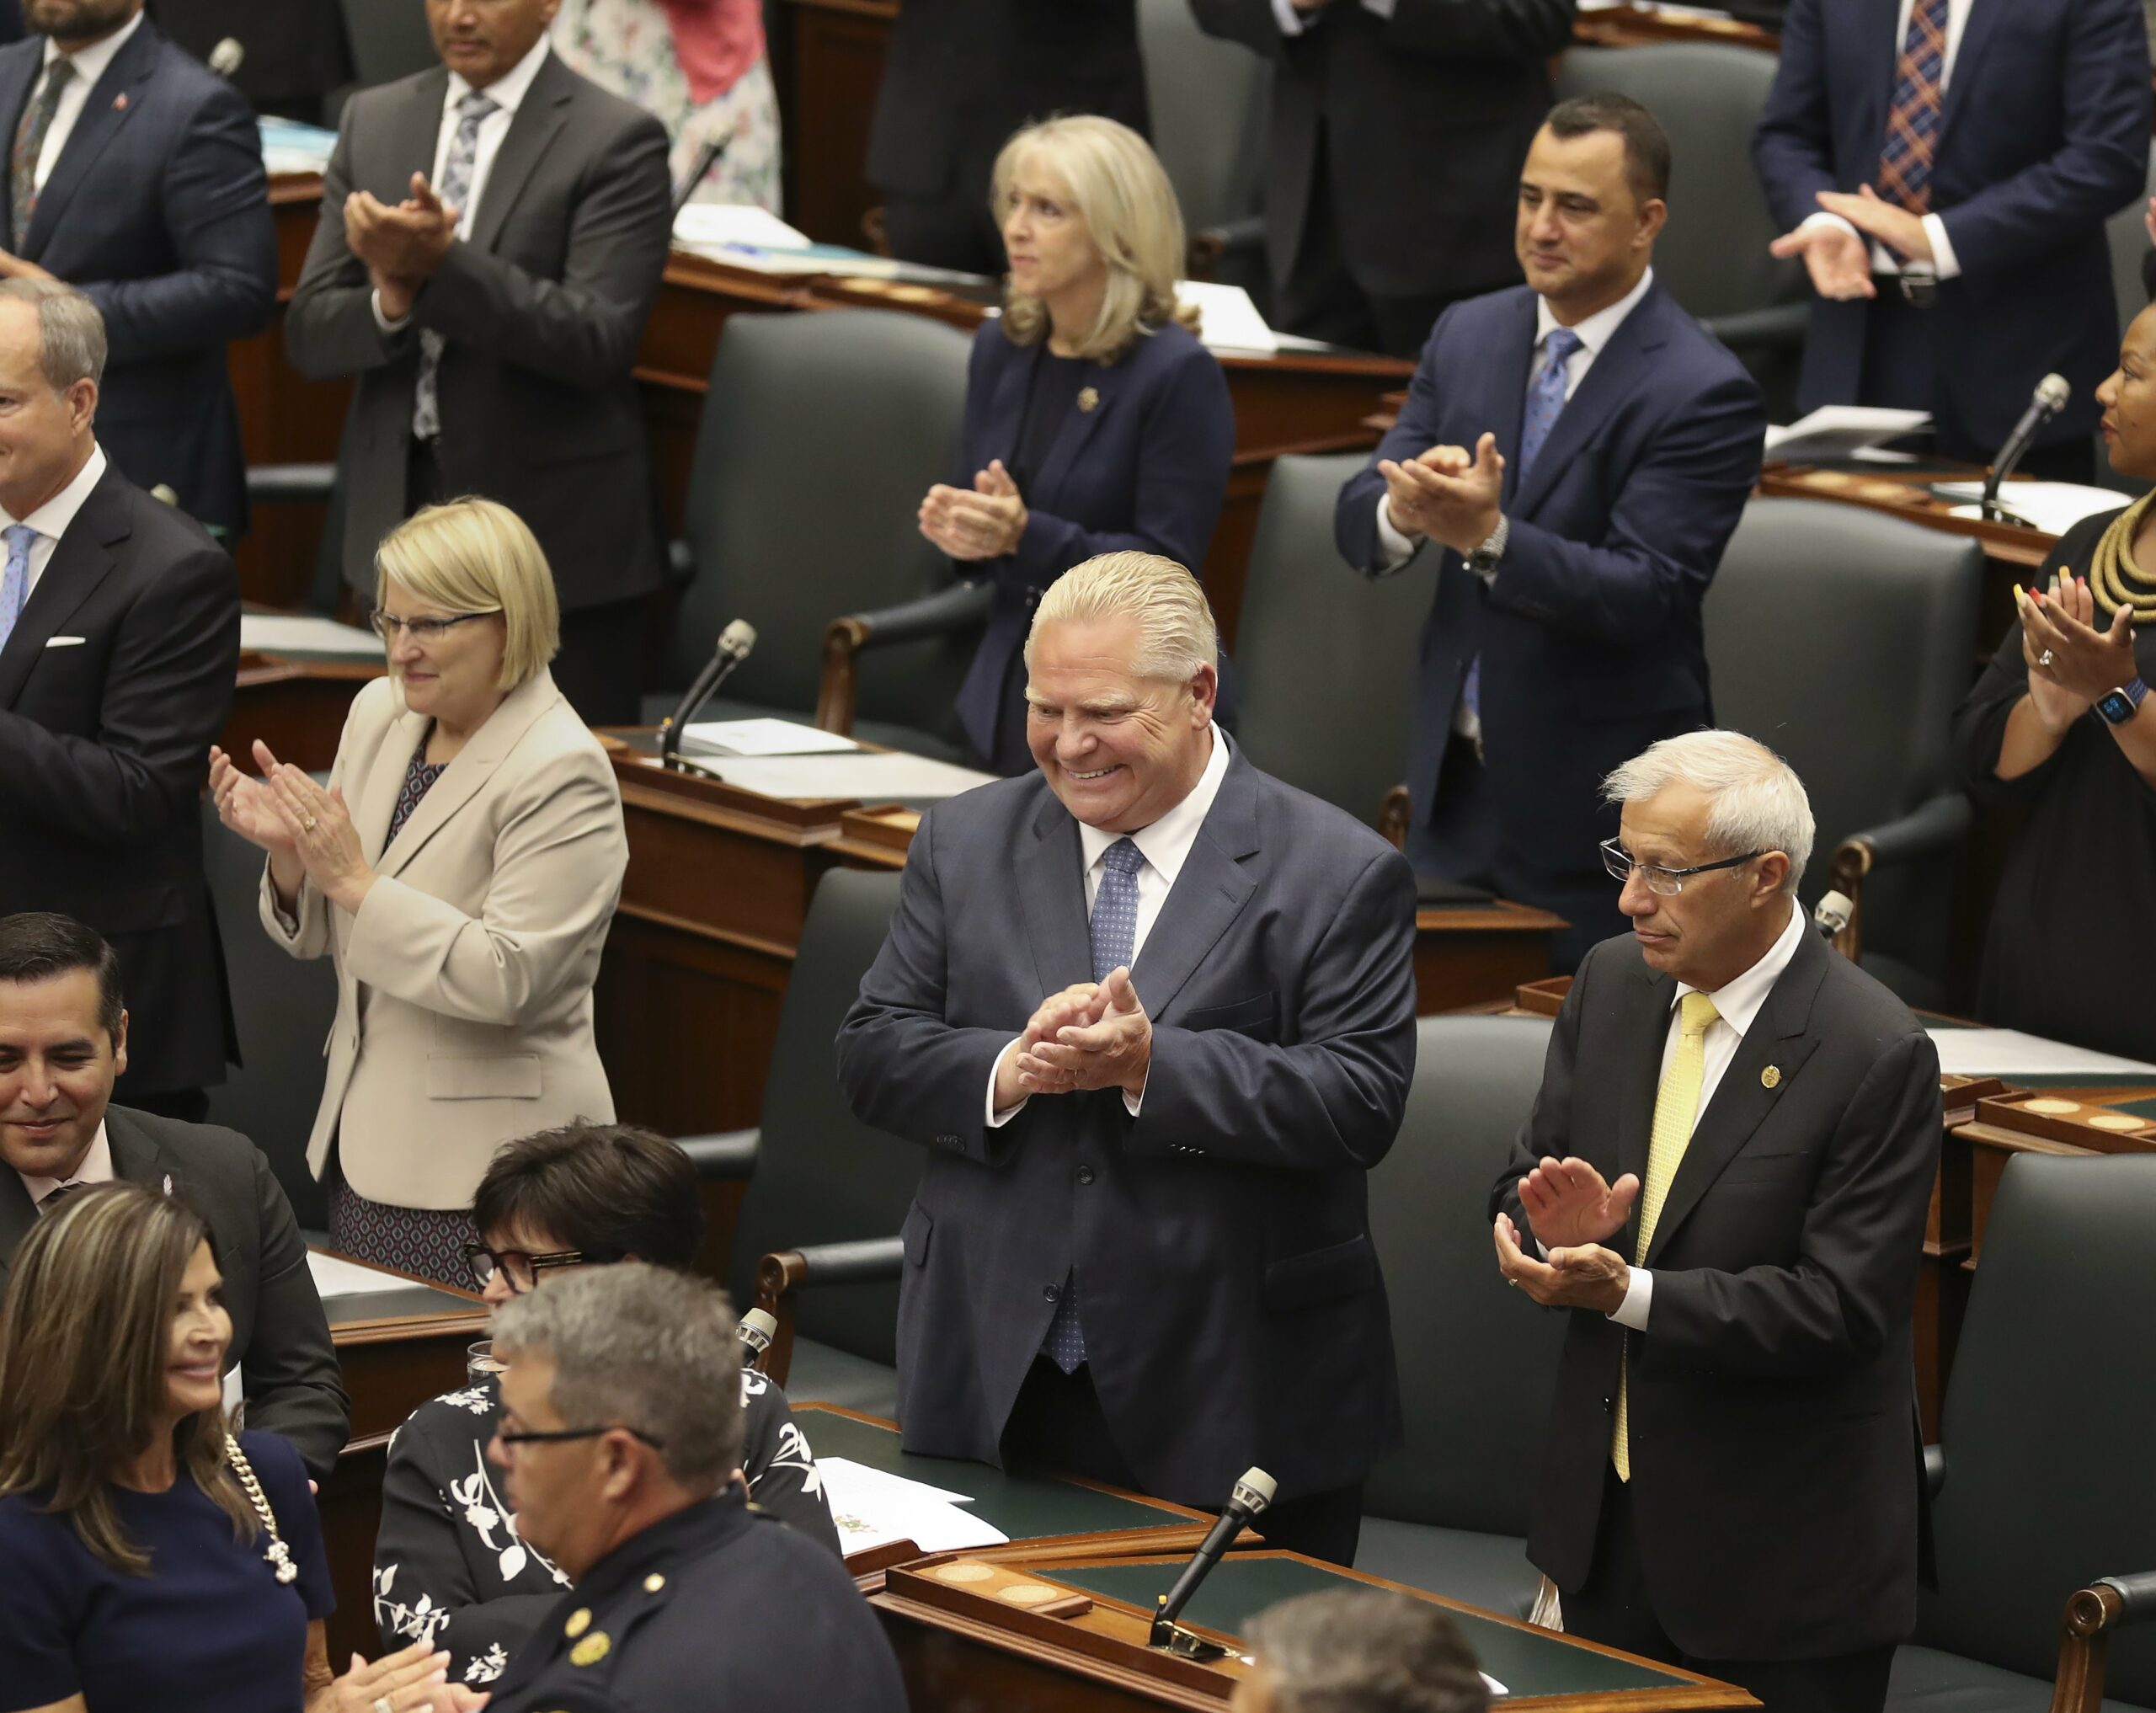 Bills next week: PCs aim to finalize Toronto, Ottawa mayors' 'strong' powers